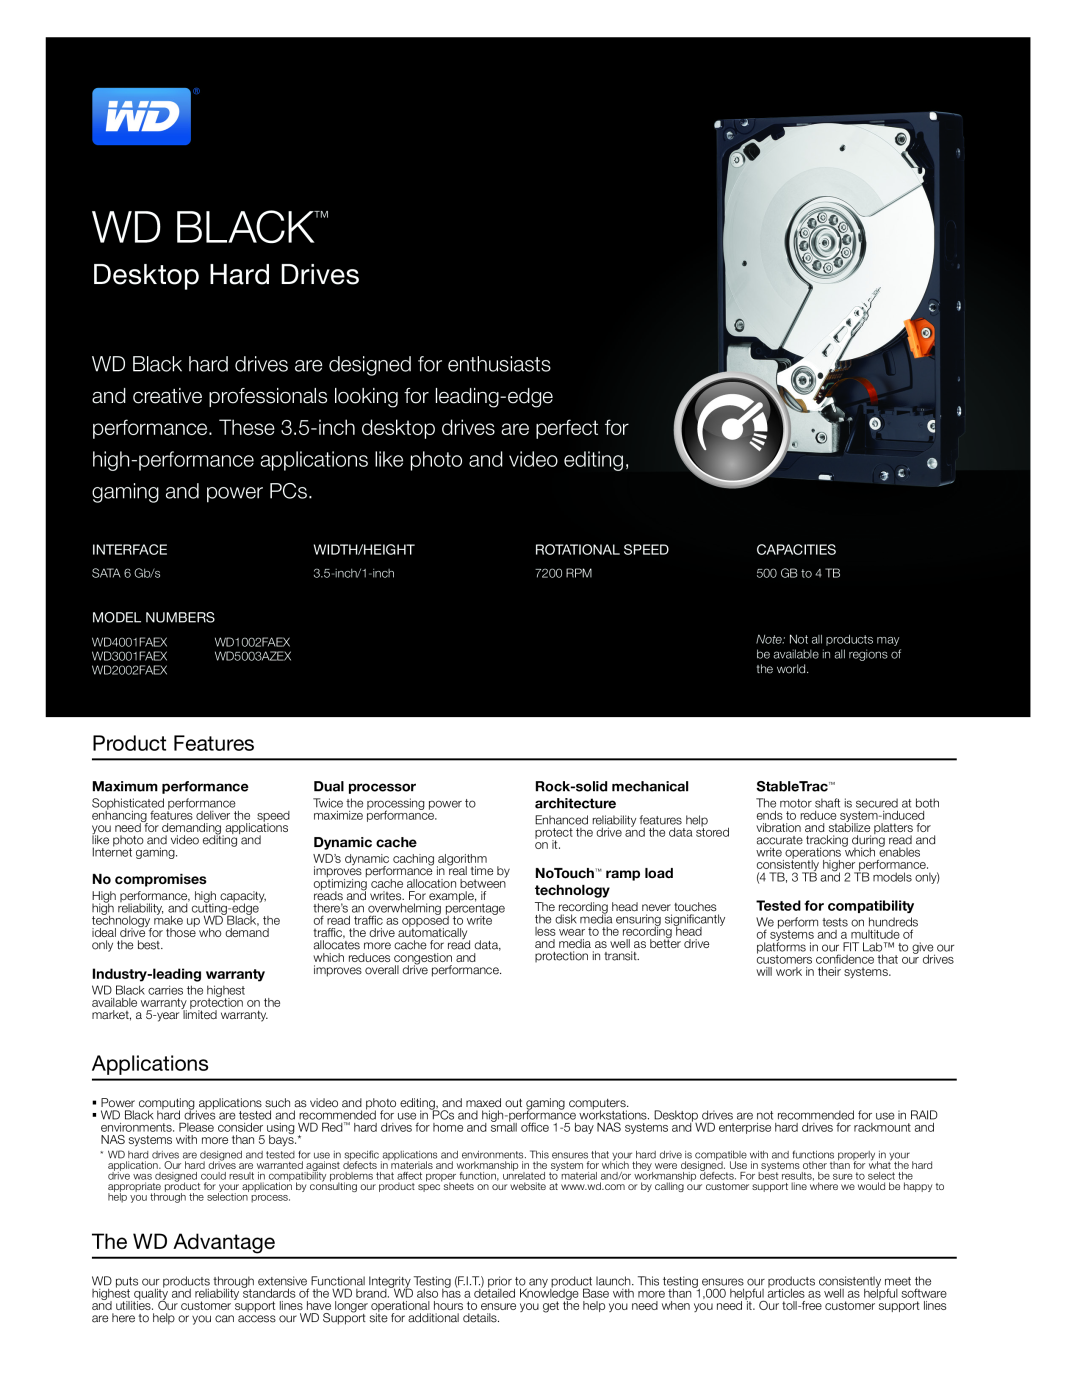 Western Digital WD4001FAEX warranty Maximum performance, No compromises, Industry-leading warranty, Dual processor 